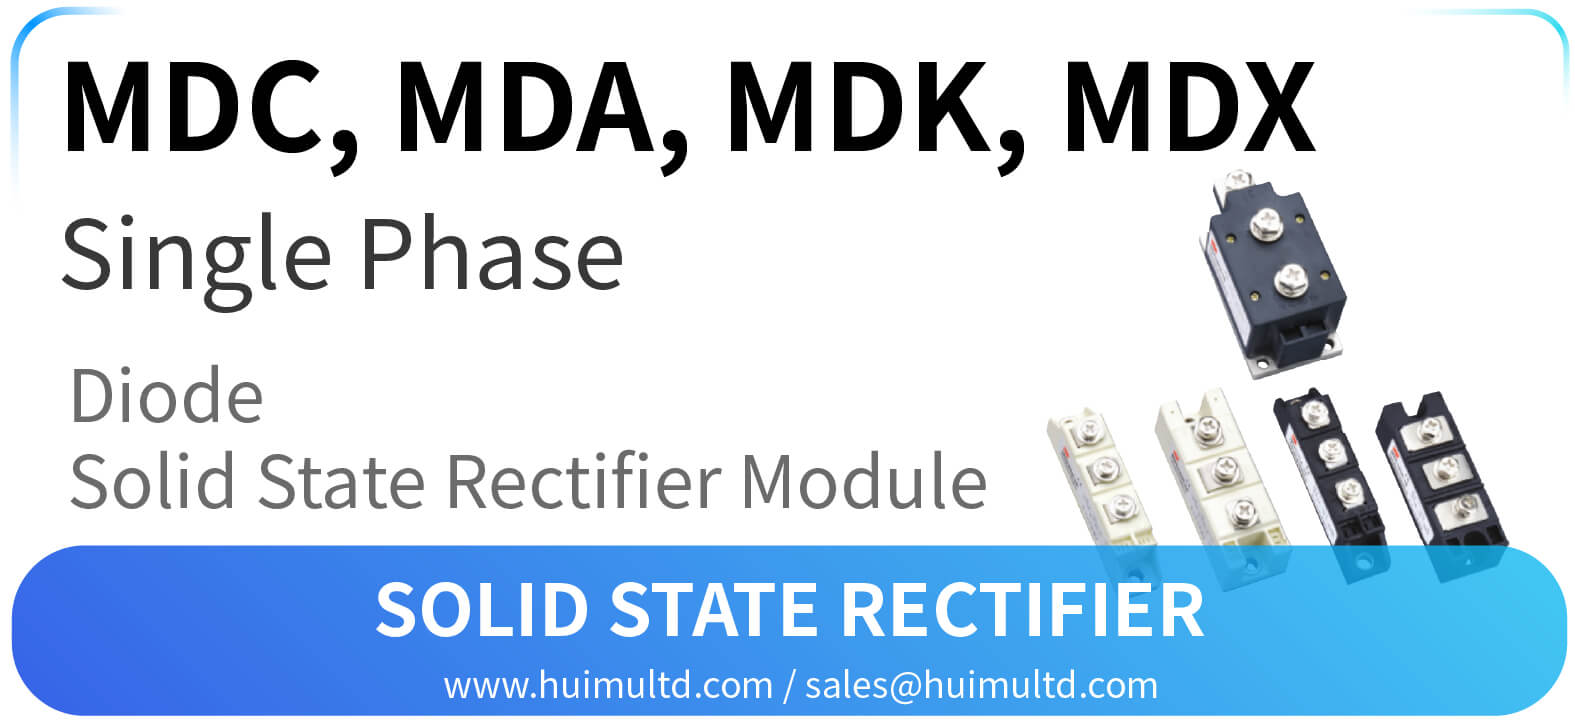 MDC, MDA, MDK, MDX Series Solid State Rectifier